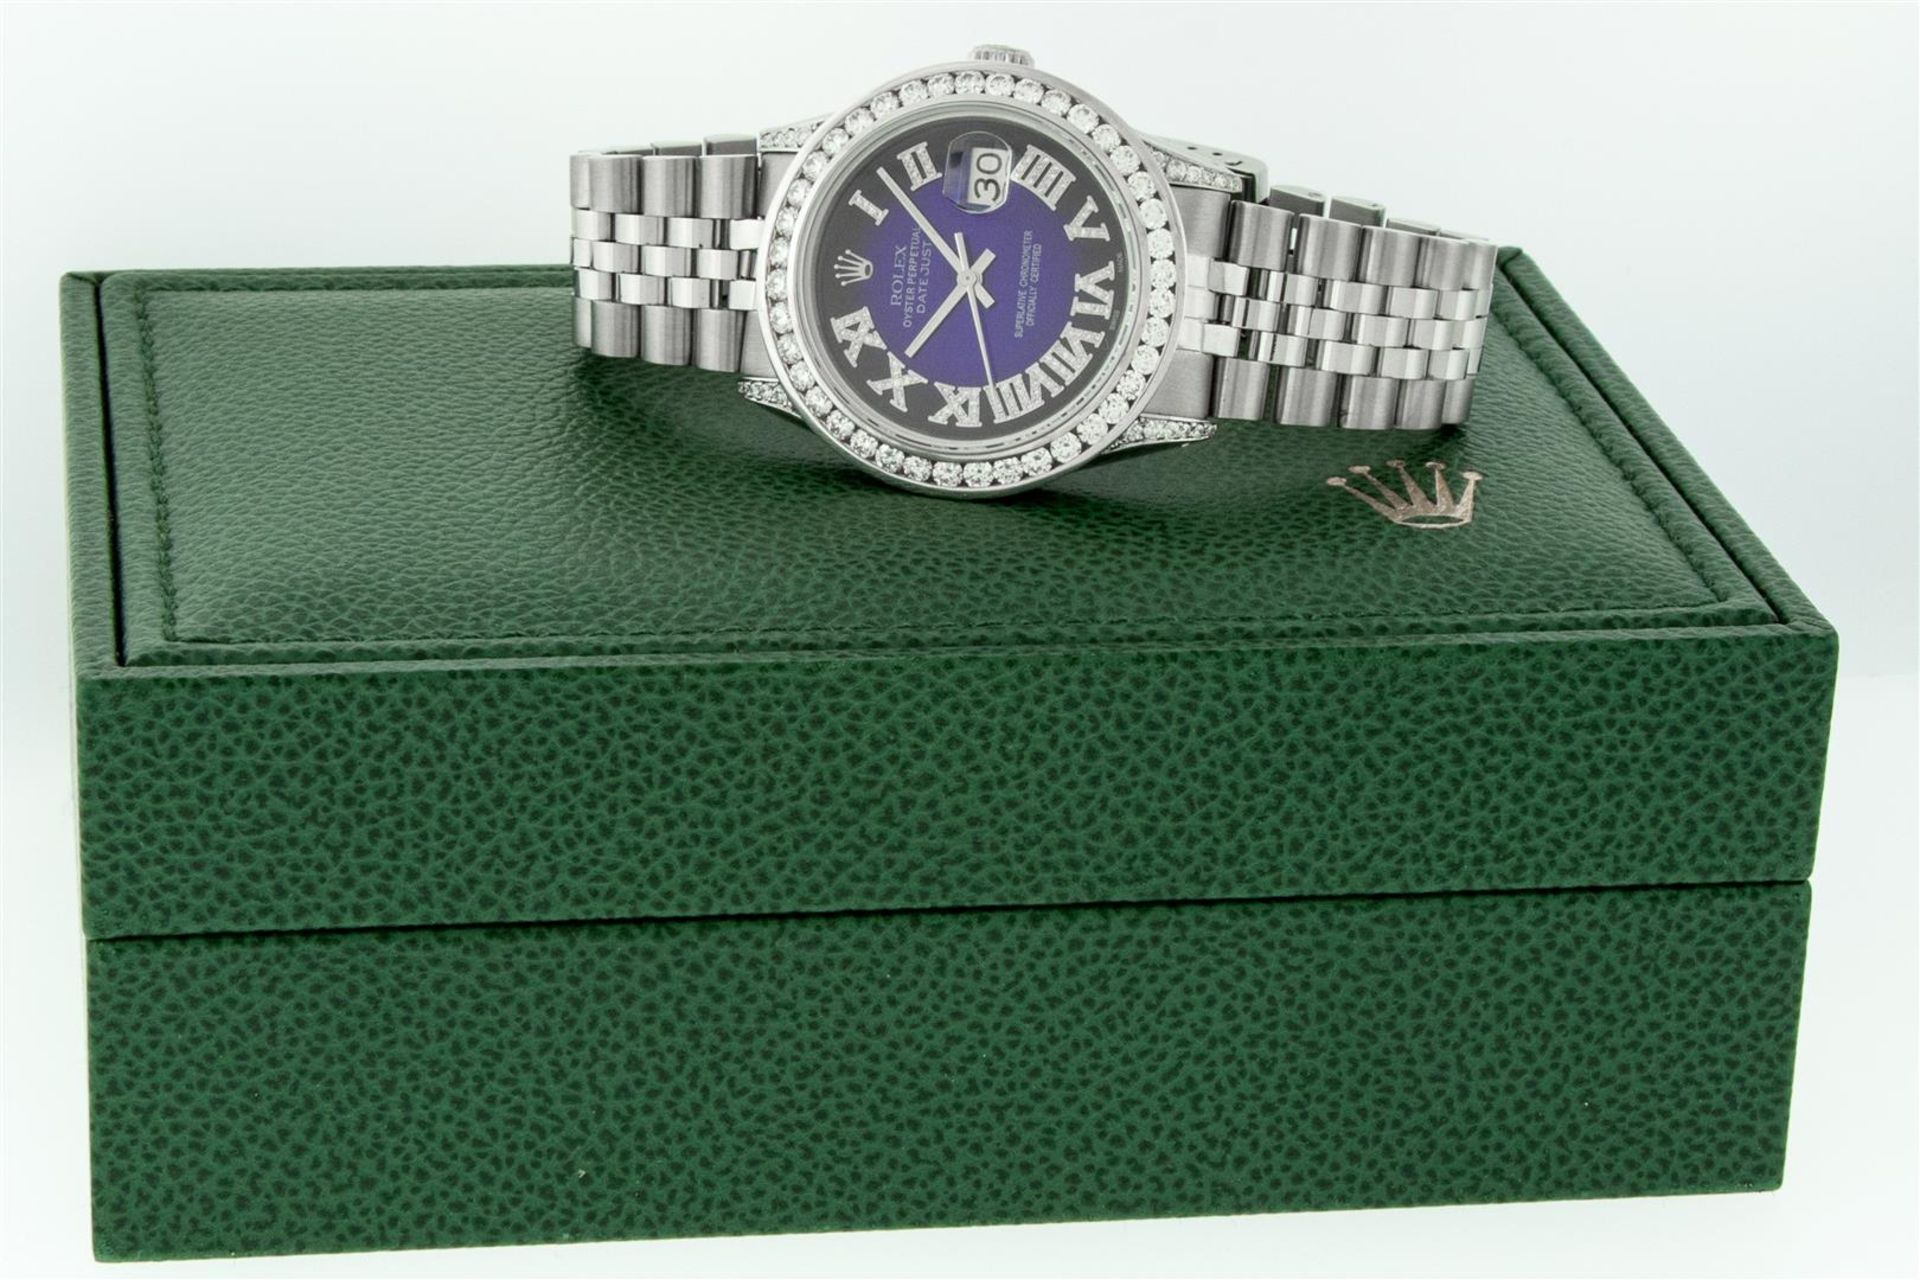 Rolex Mens Stainless Steel Blue Vignette Roman 3ctw Diamond Datejust Wristwatch - Image 7 of 9